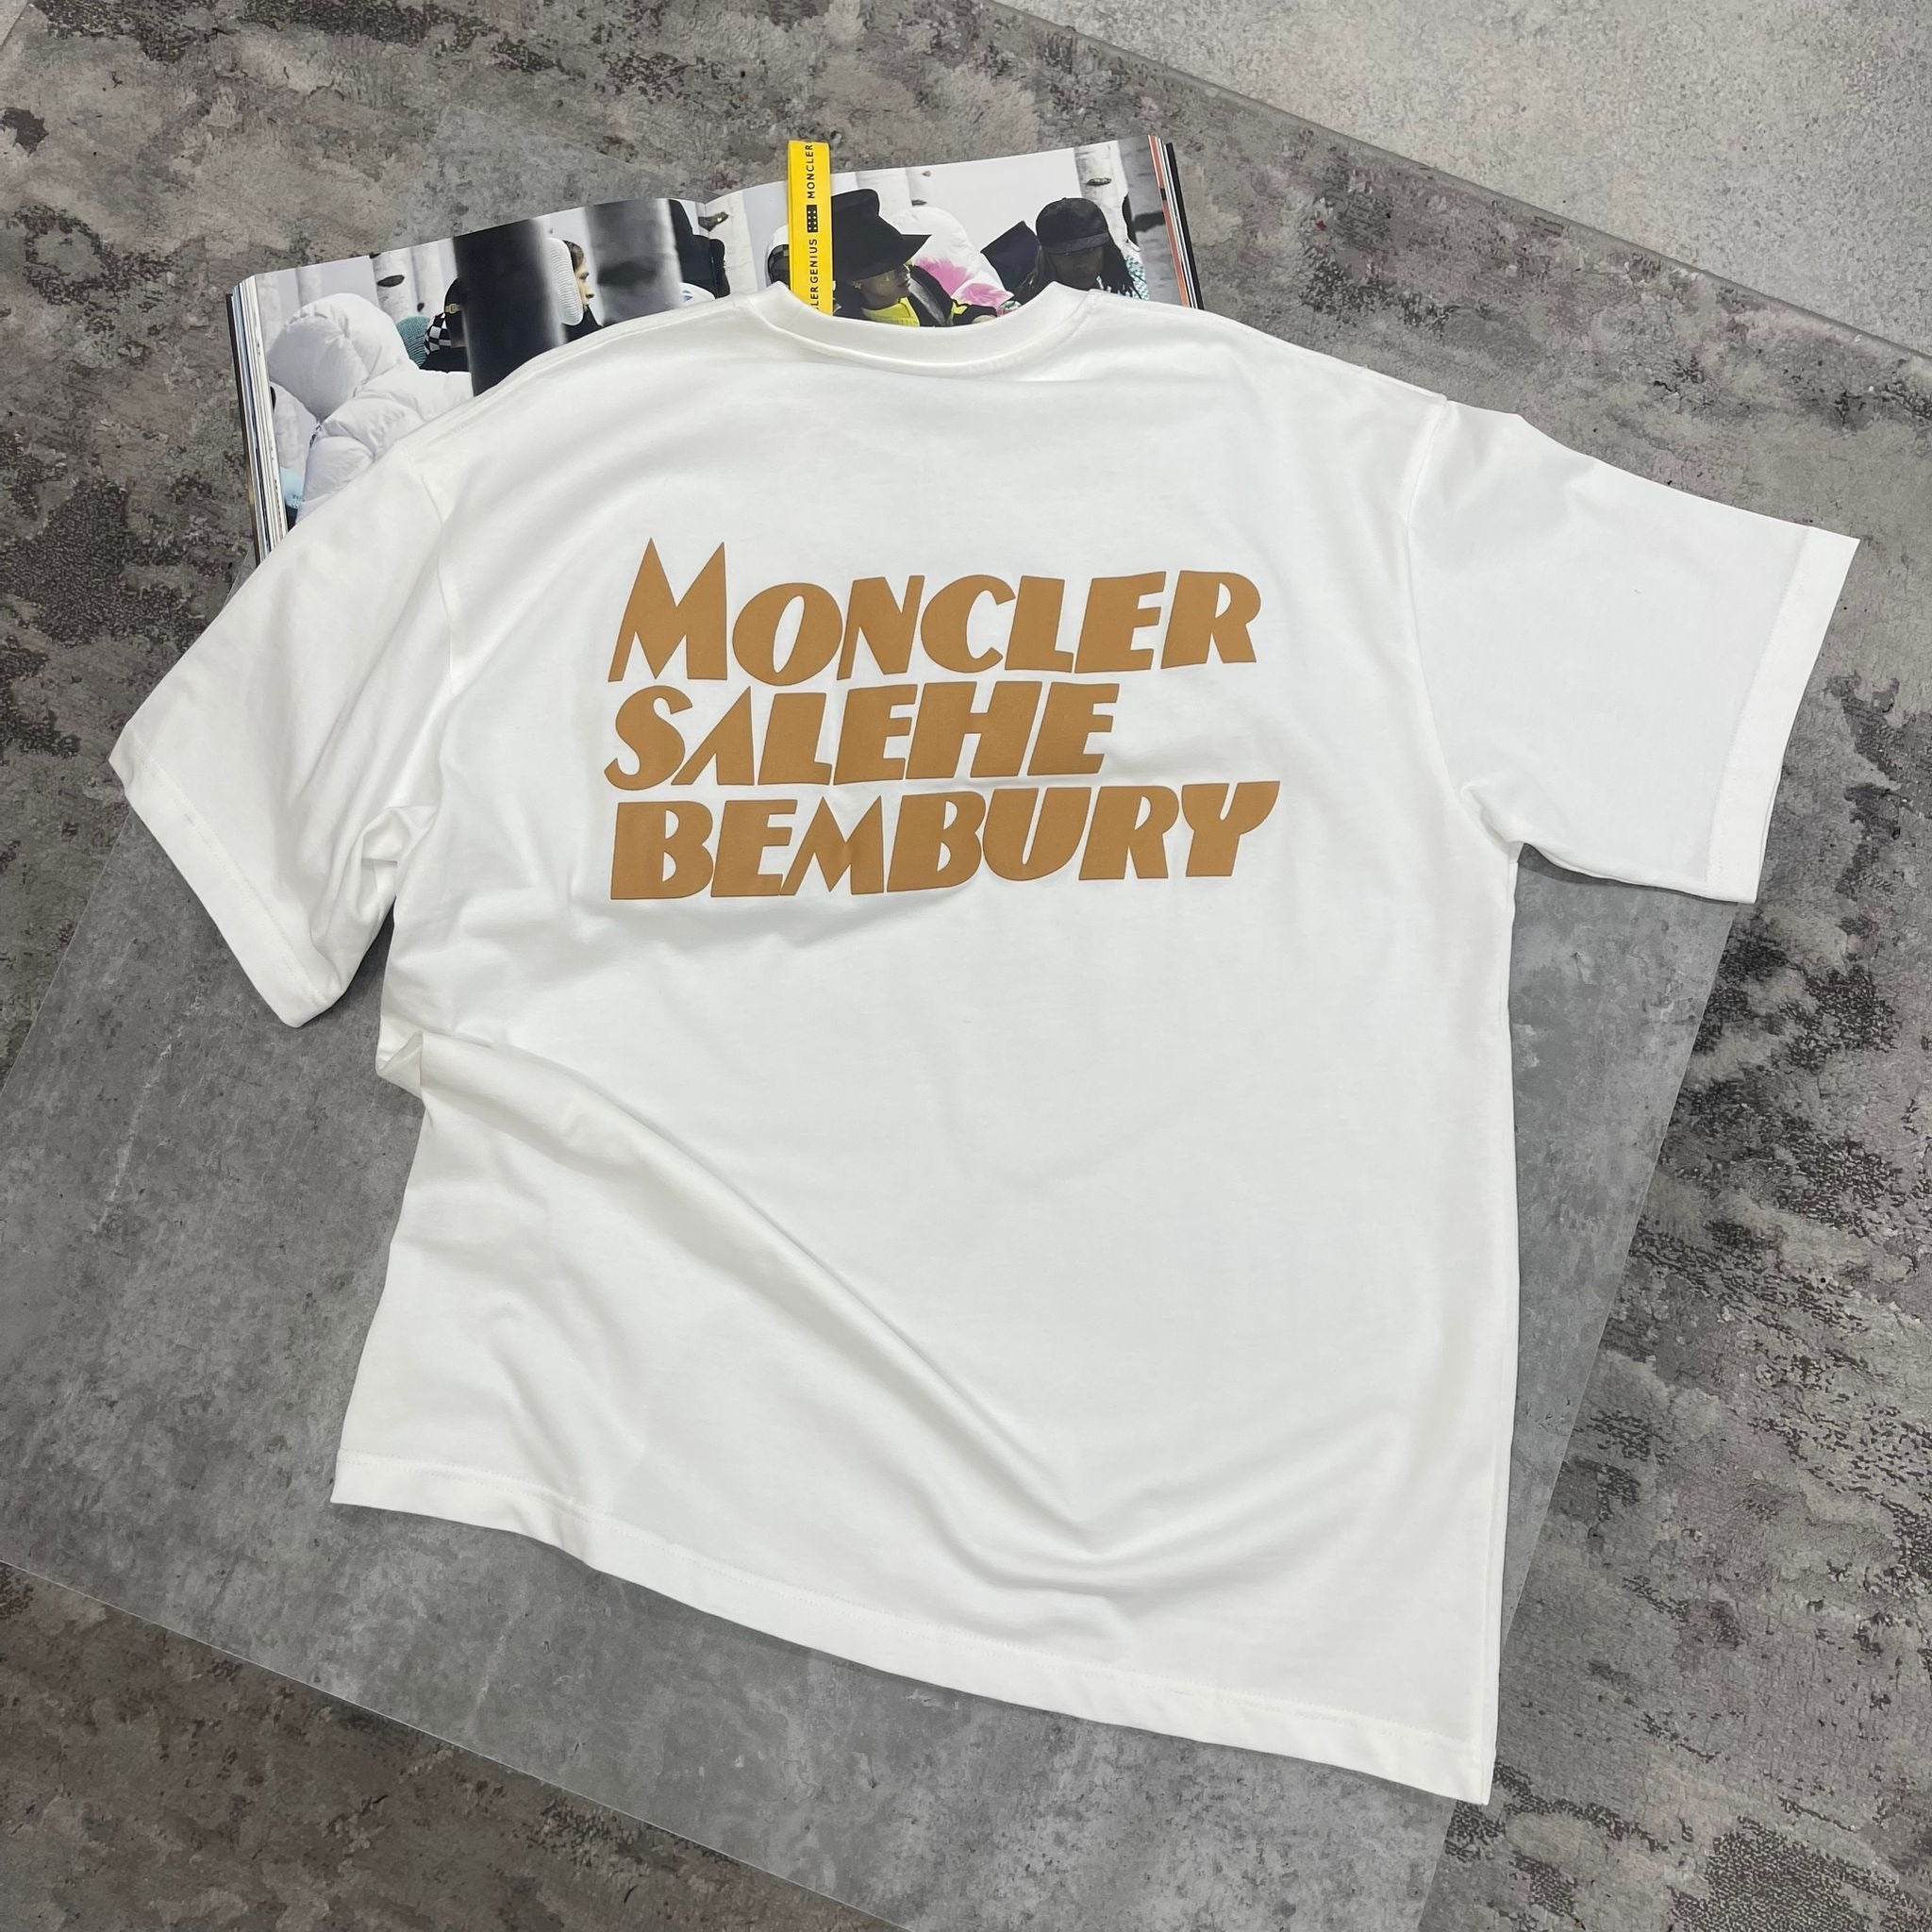 MONCLER - SALEHE BEMBURY T-SHIRT - WHITE